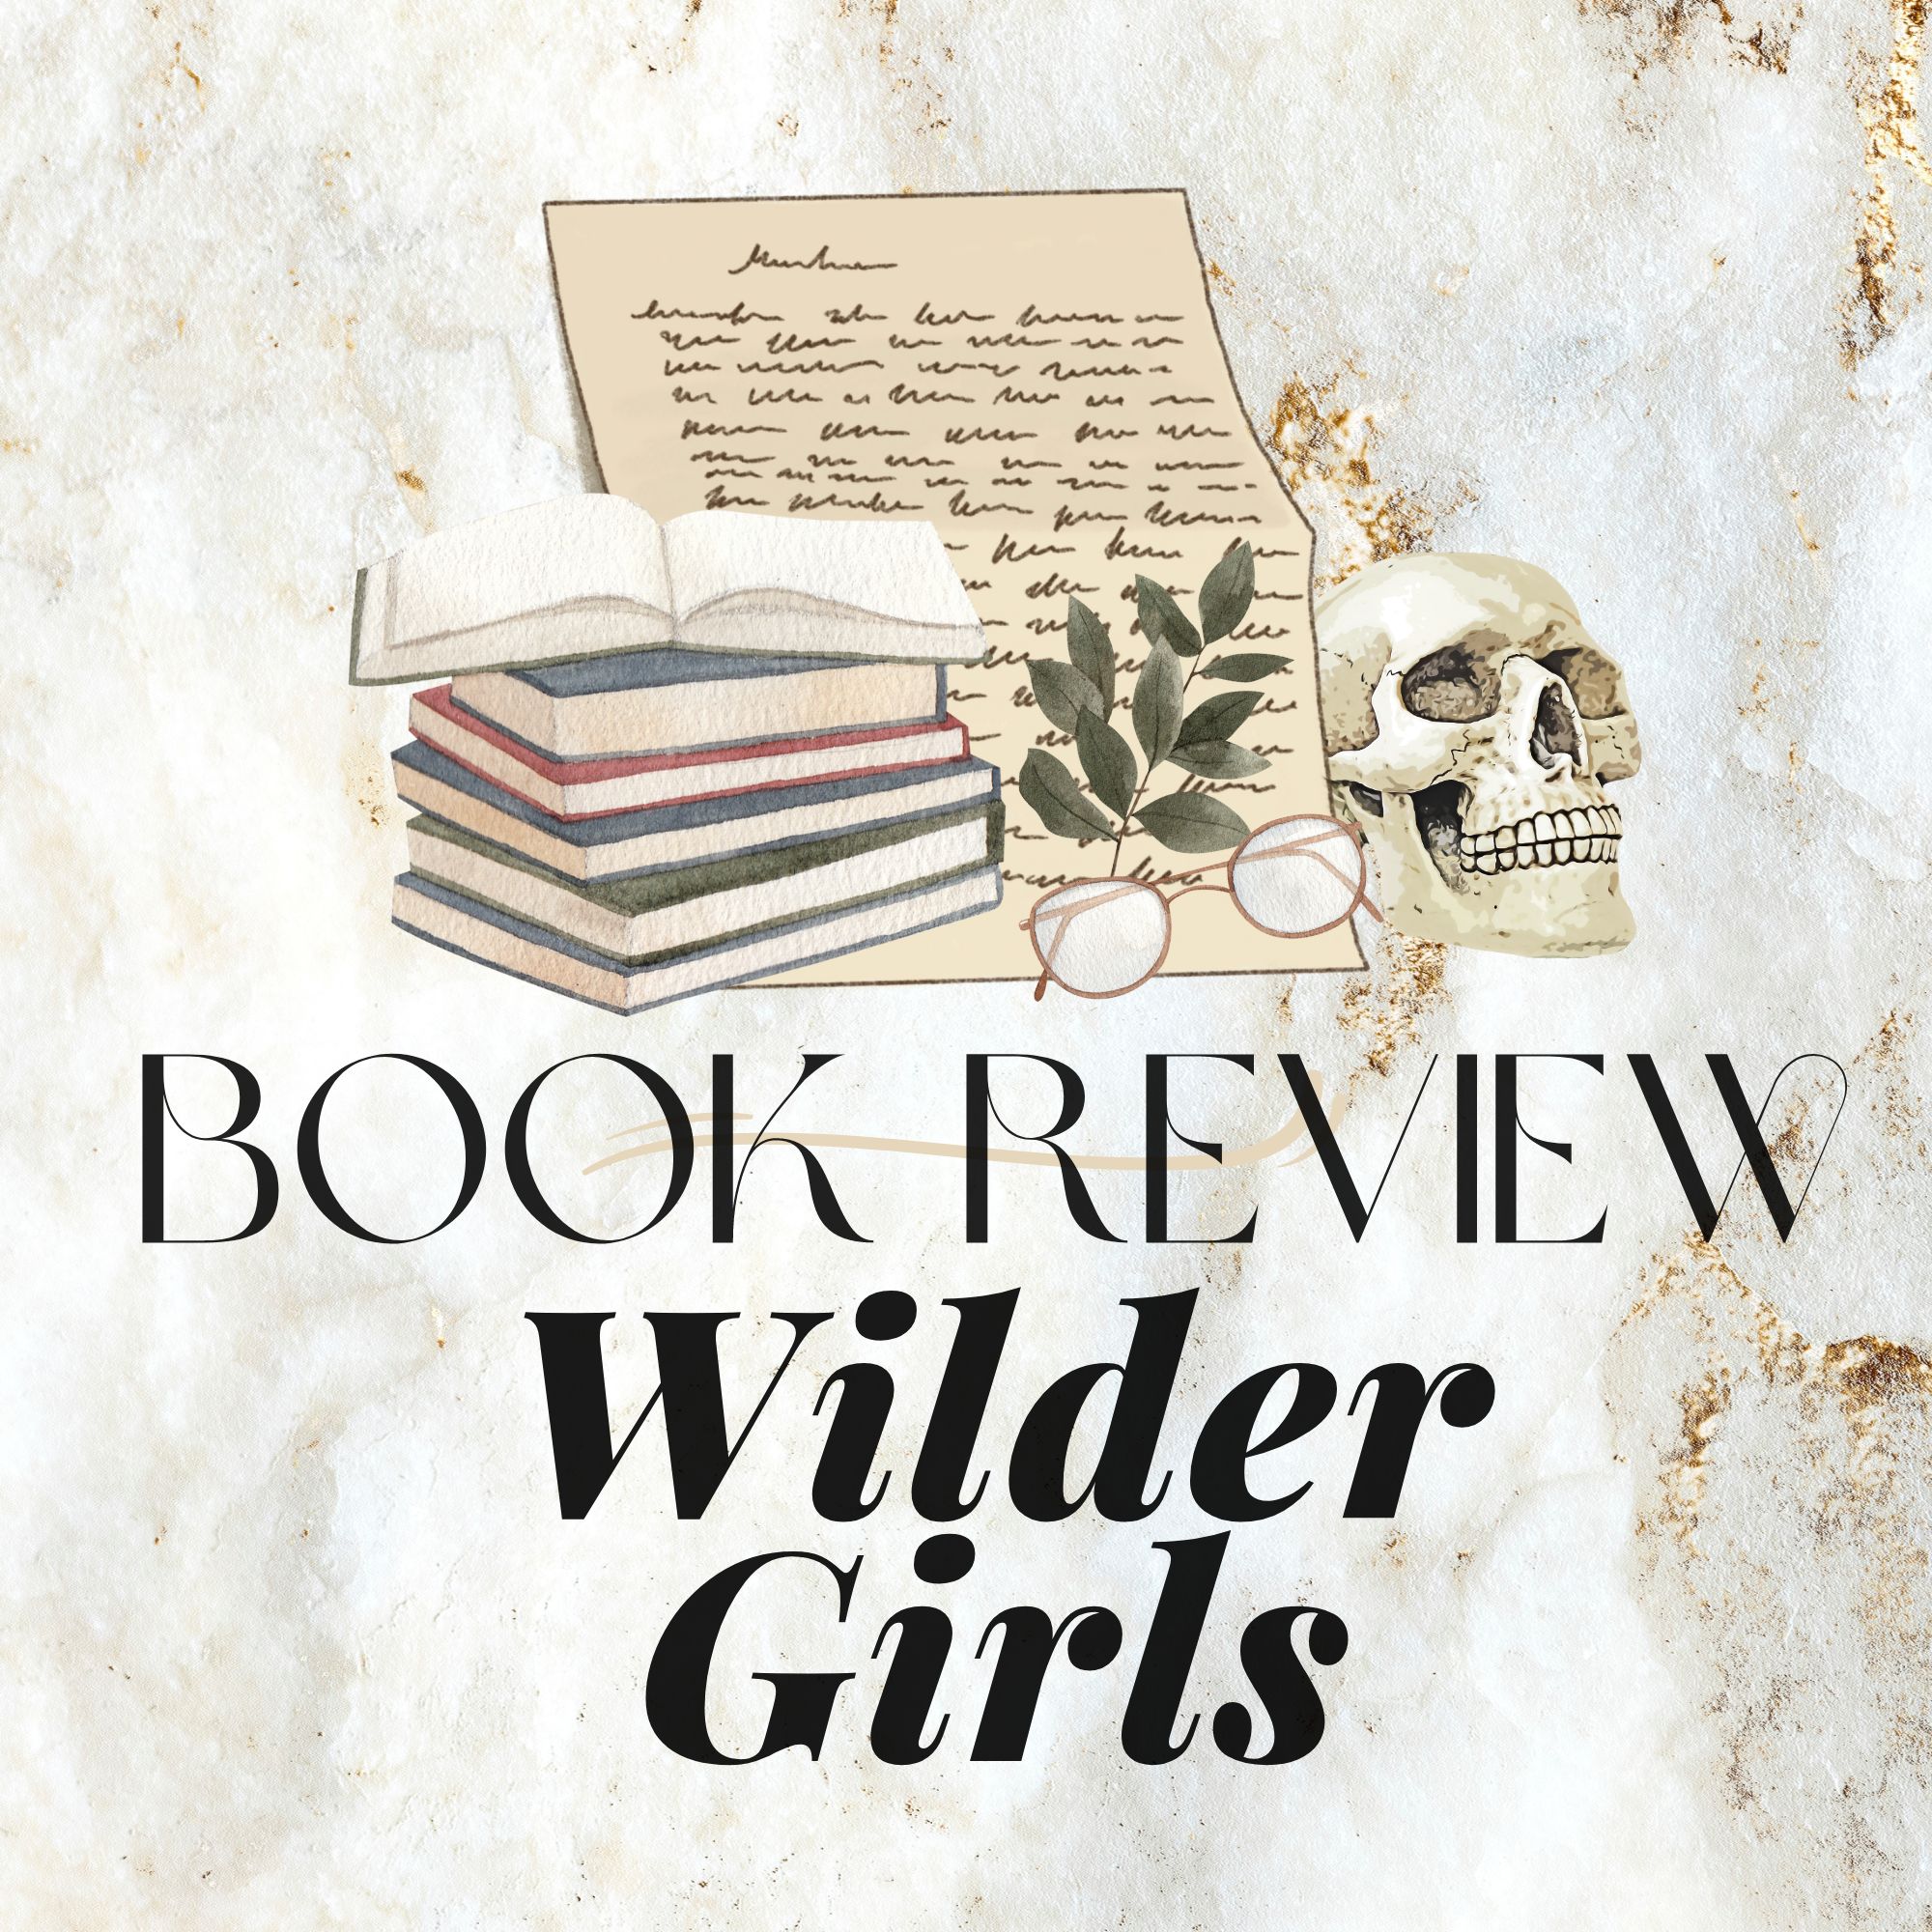 Good Reads Challenge Book Review:  Wilder Girls